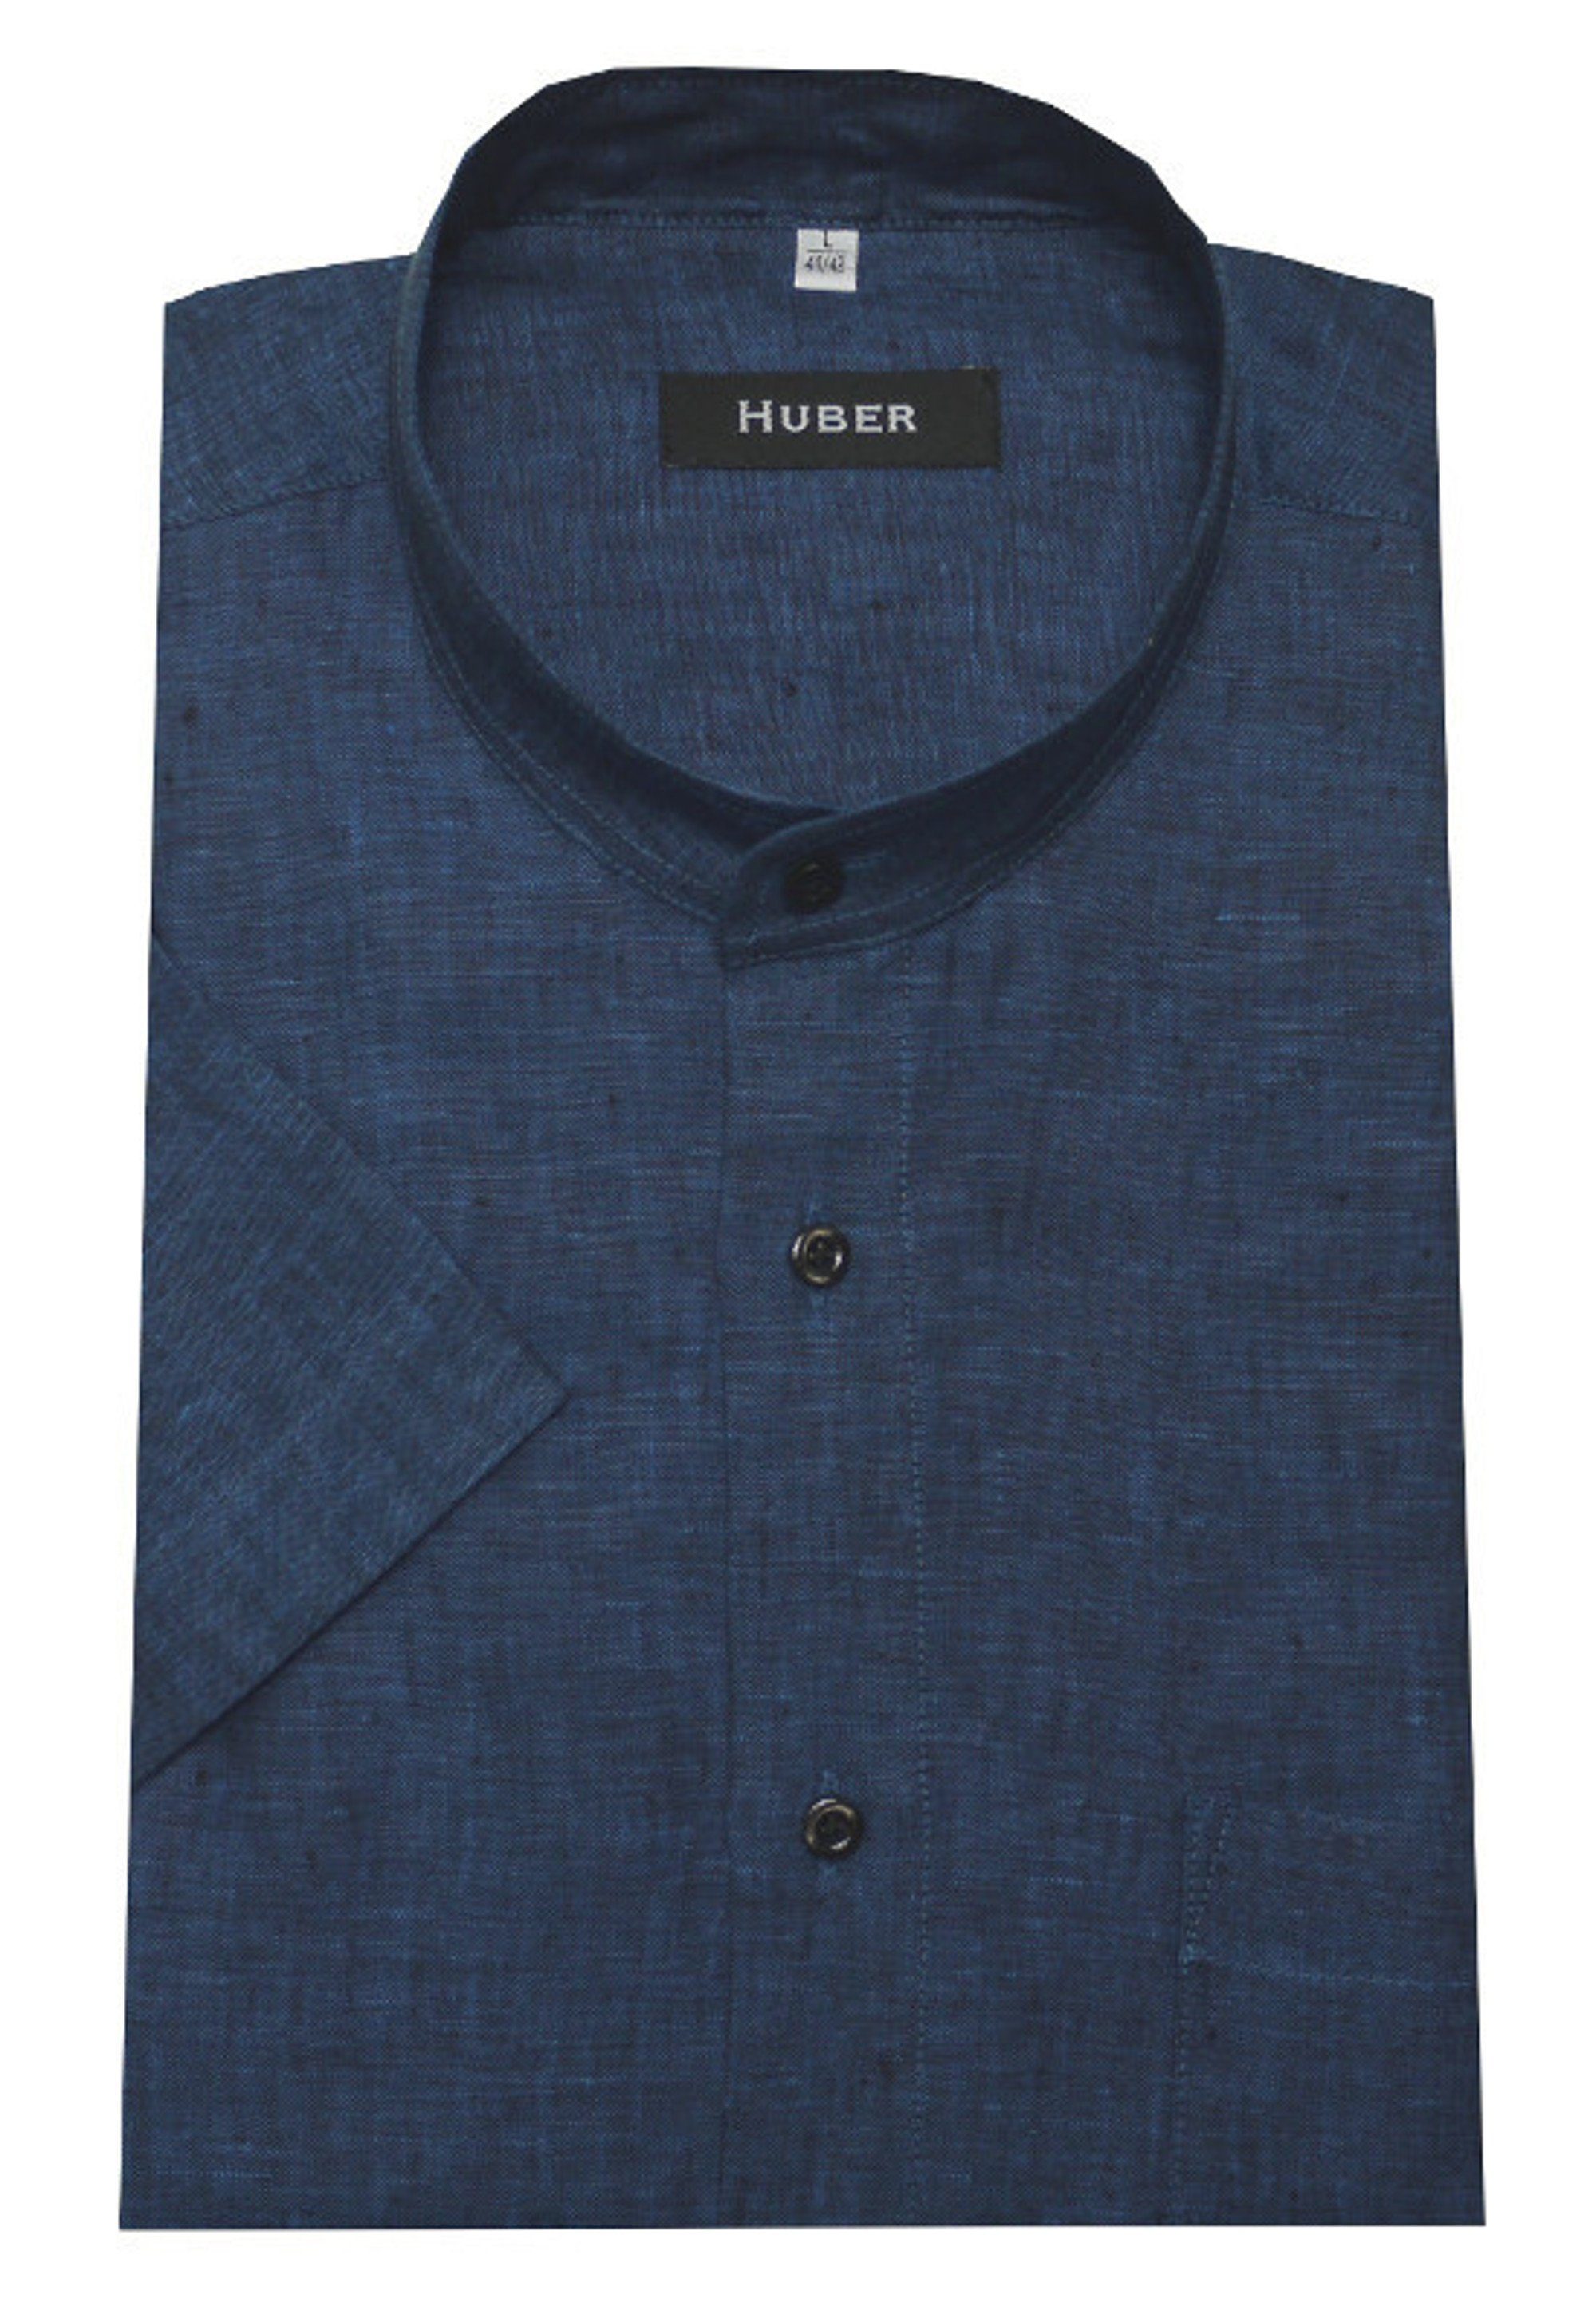 Huber Hemden Kurzarmhemd HU-0114 Stehkragen Kurzarm 100%Leinen-feiner leichter Stoff Regular Fit blau